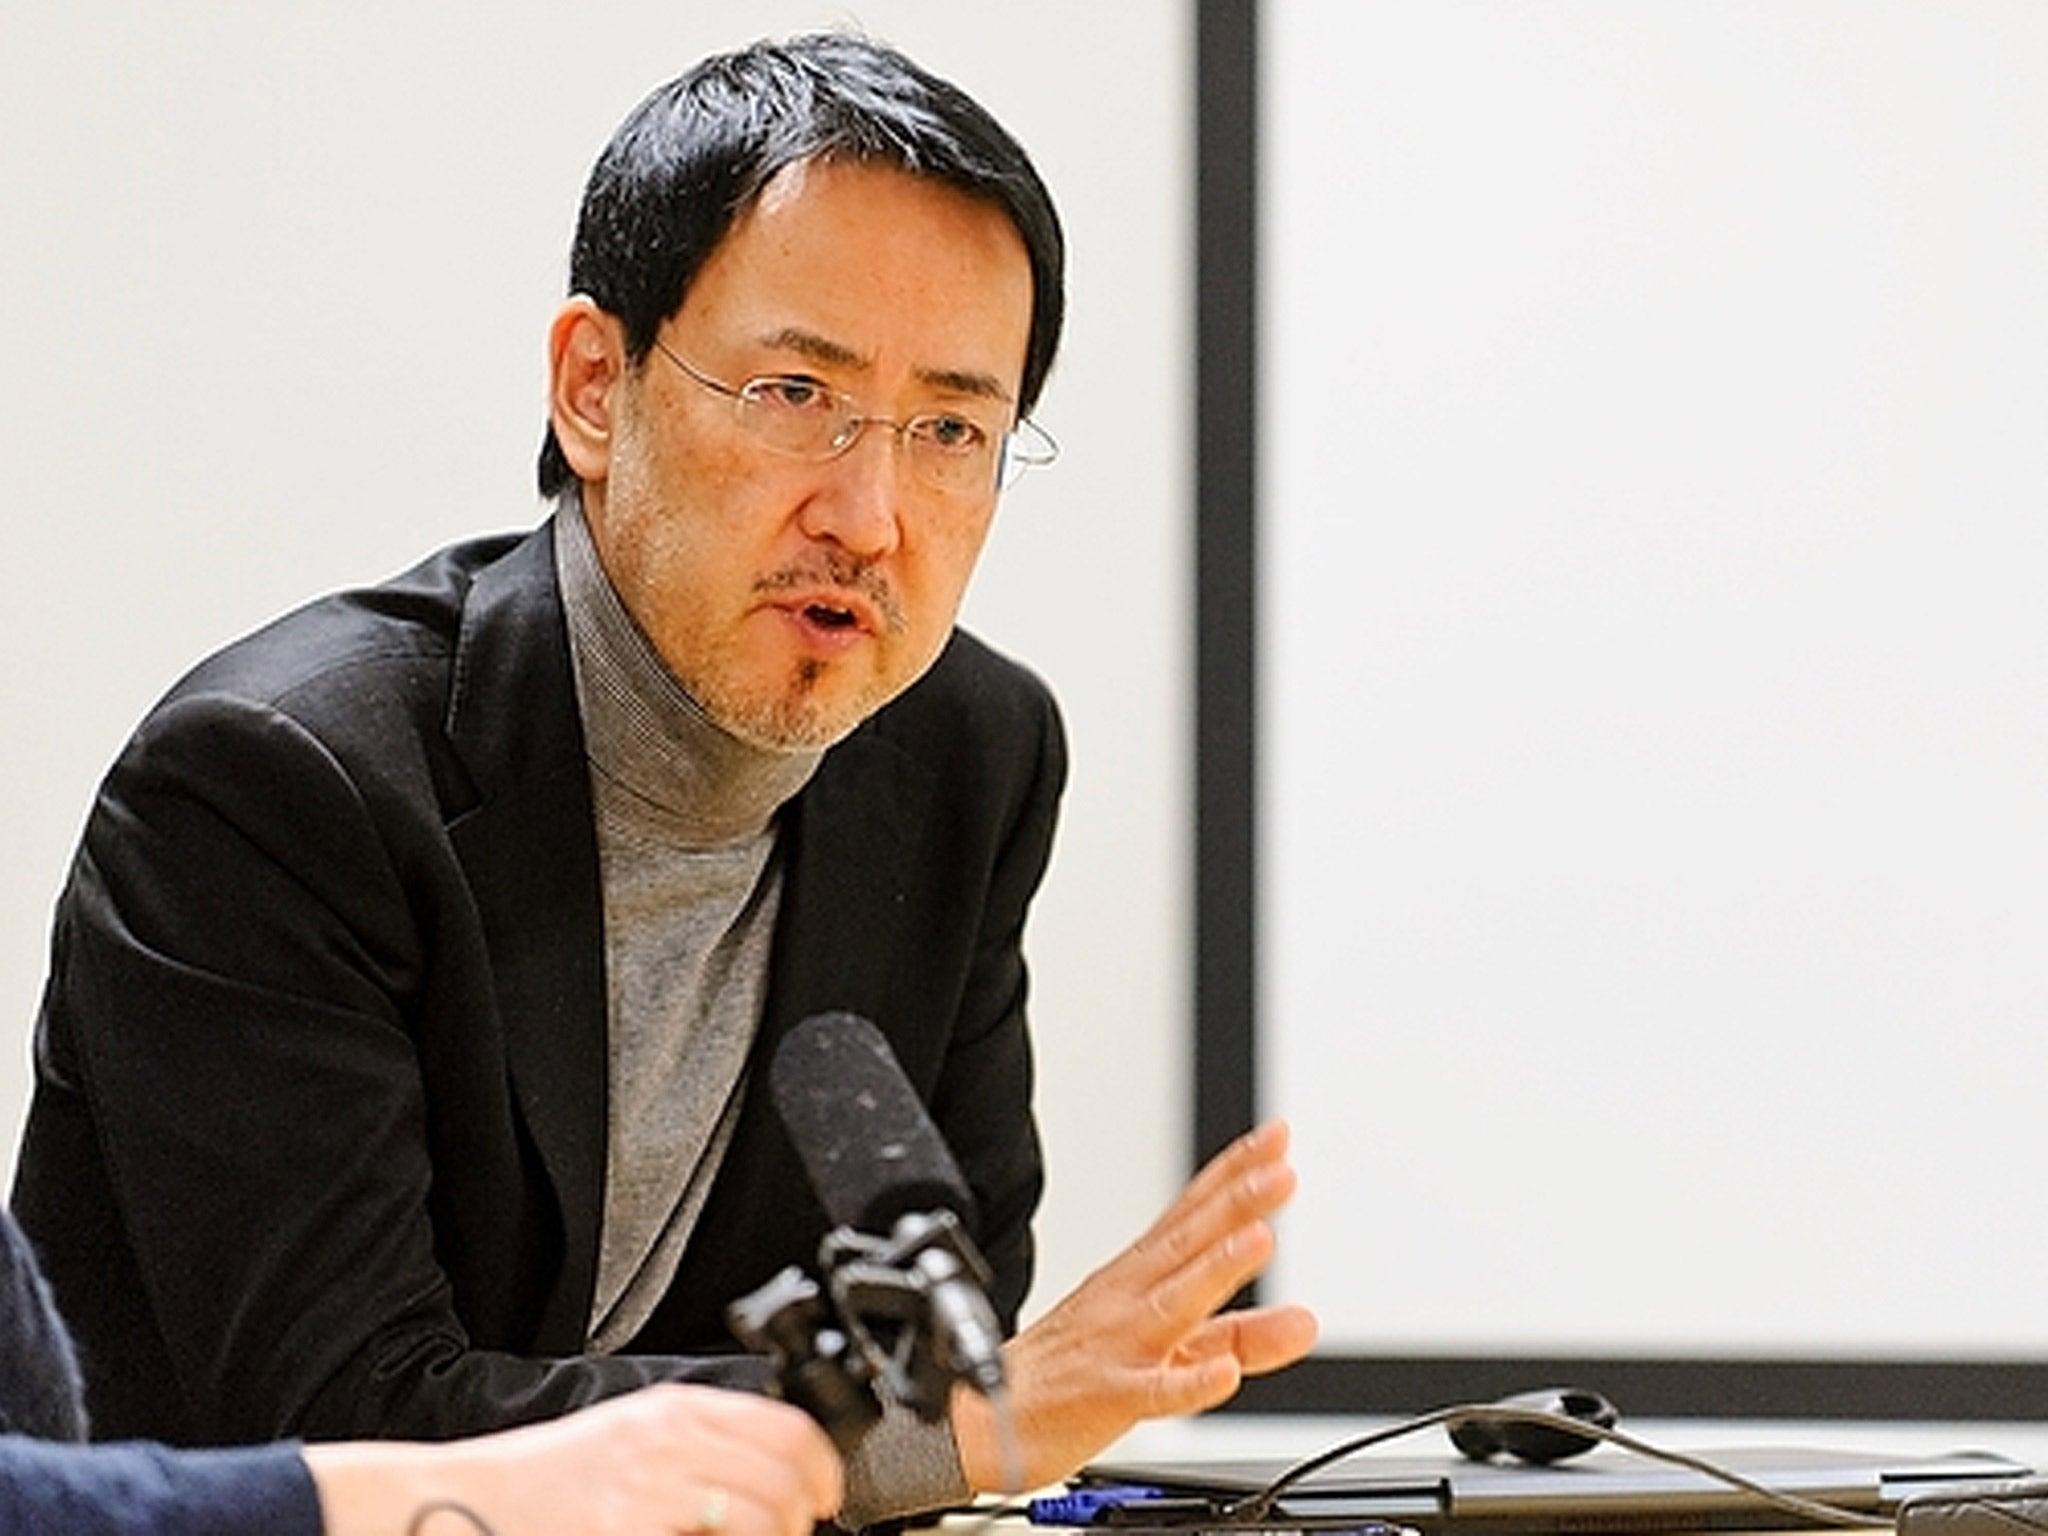 Yoshihiro Kawaoka's study has yet to be published